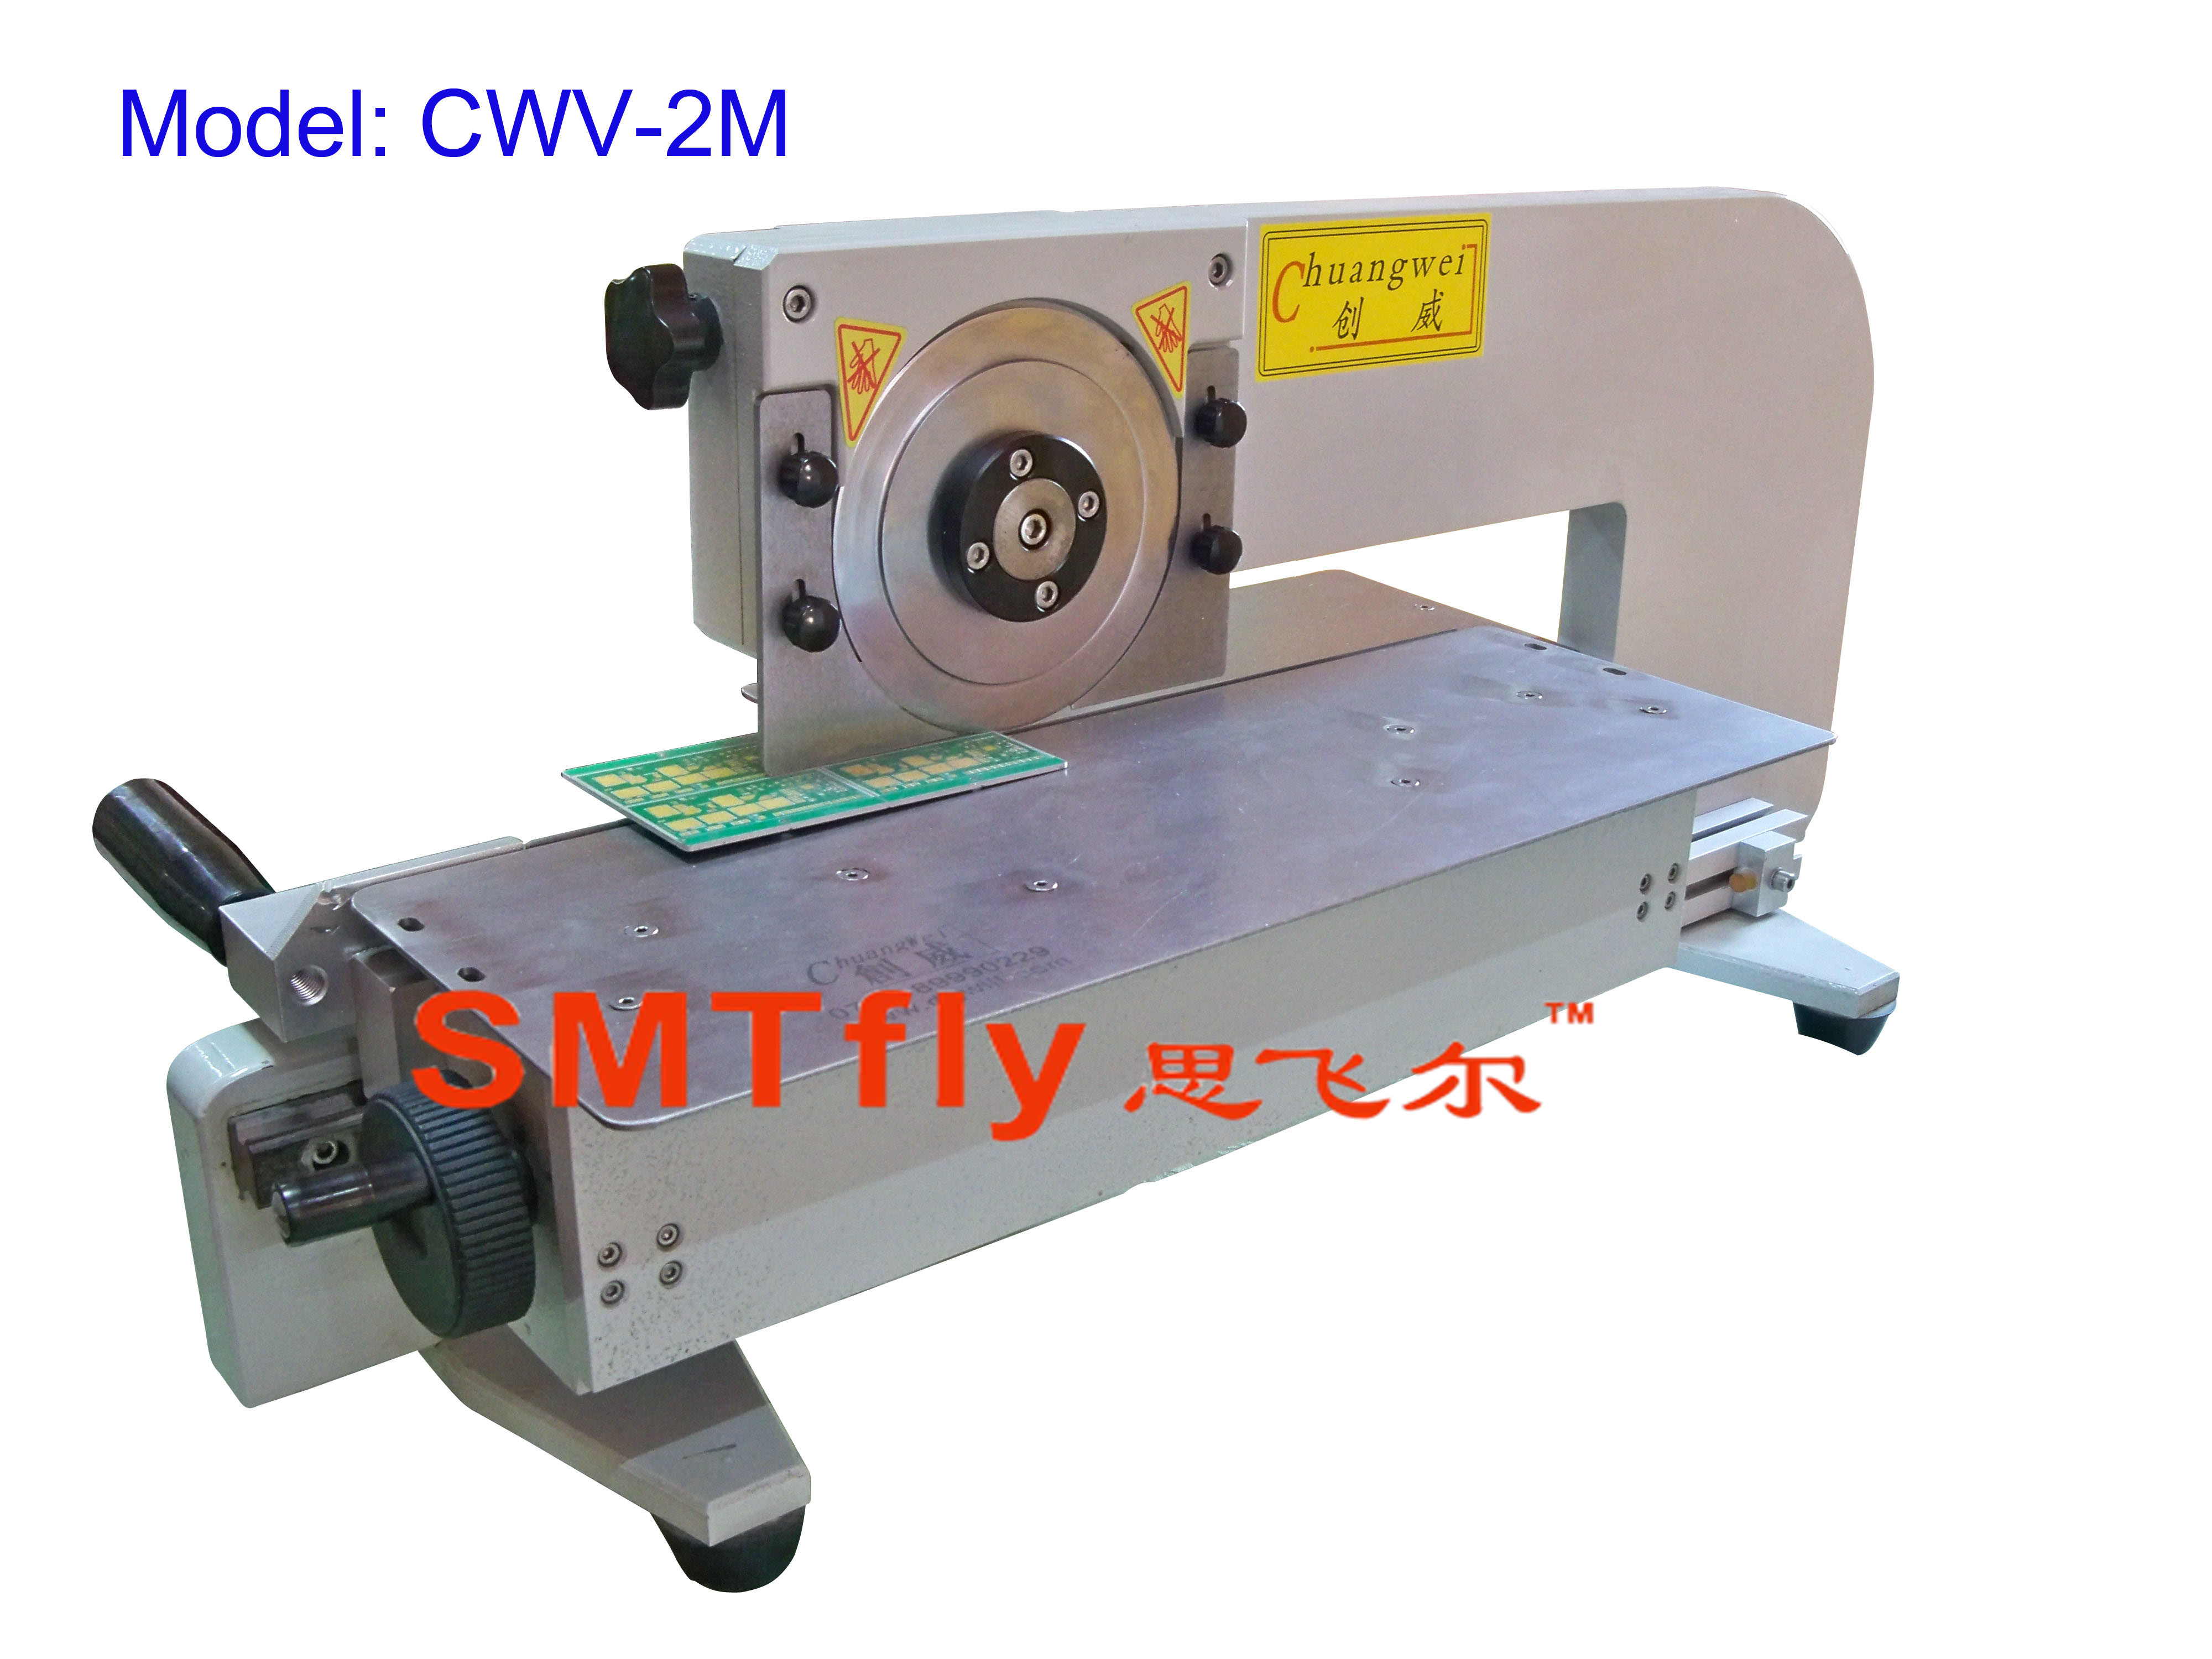 V-cut PCB Depaneling Machine,SMTfly-2M